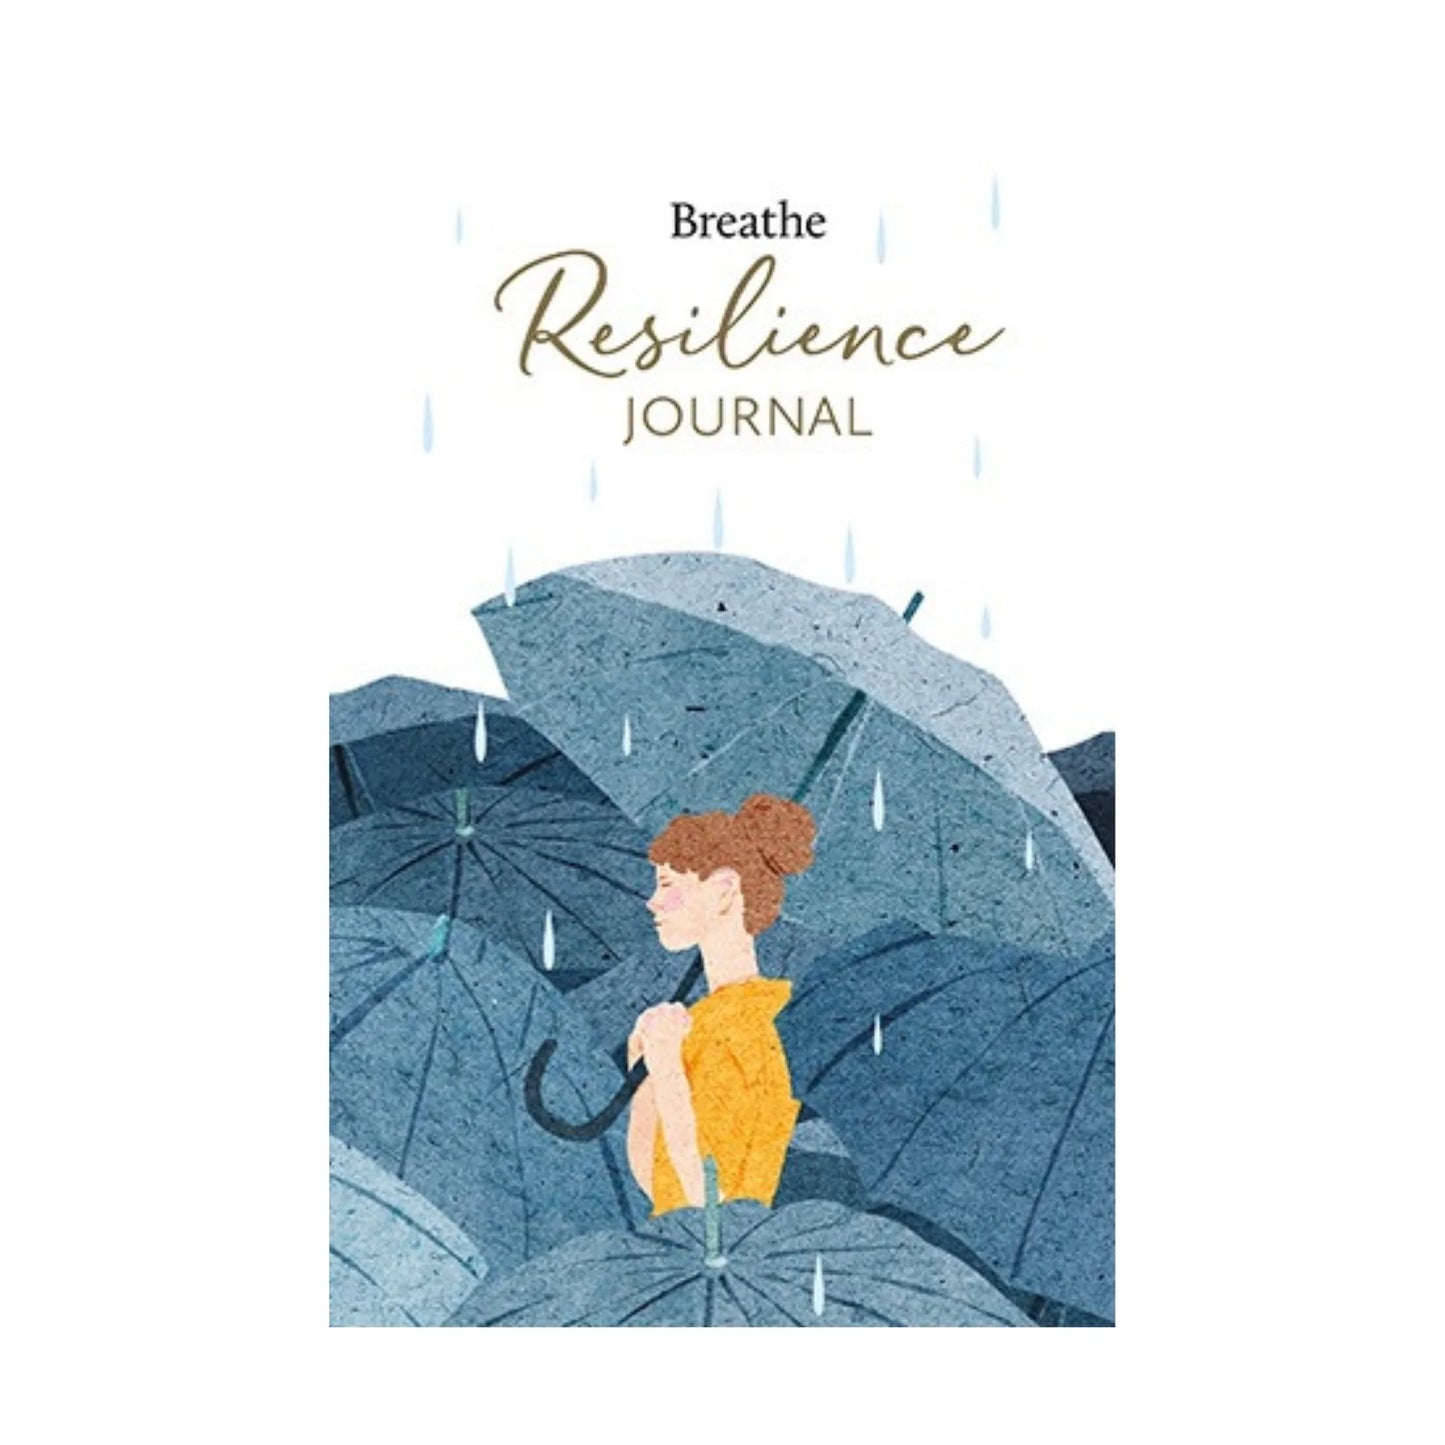 Breathe Journal Resilience